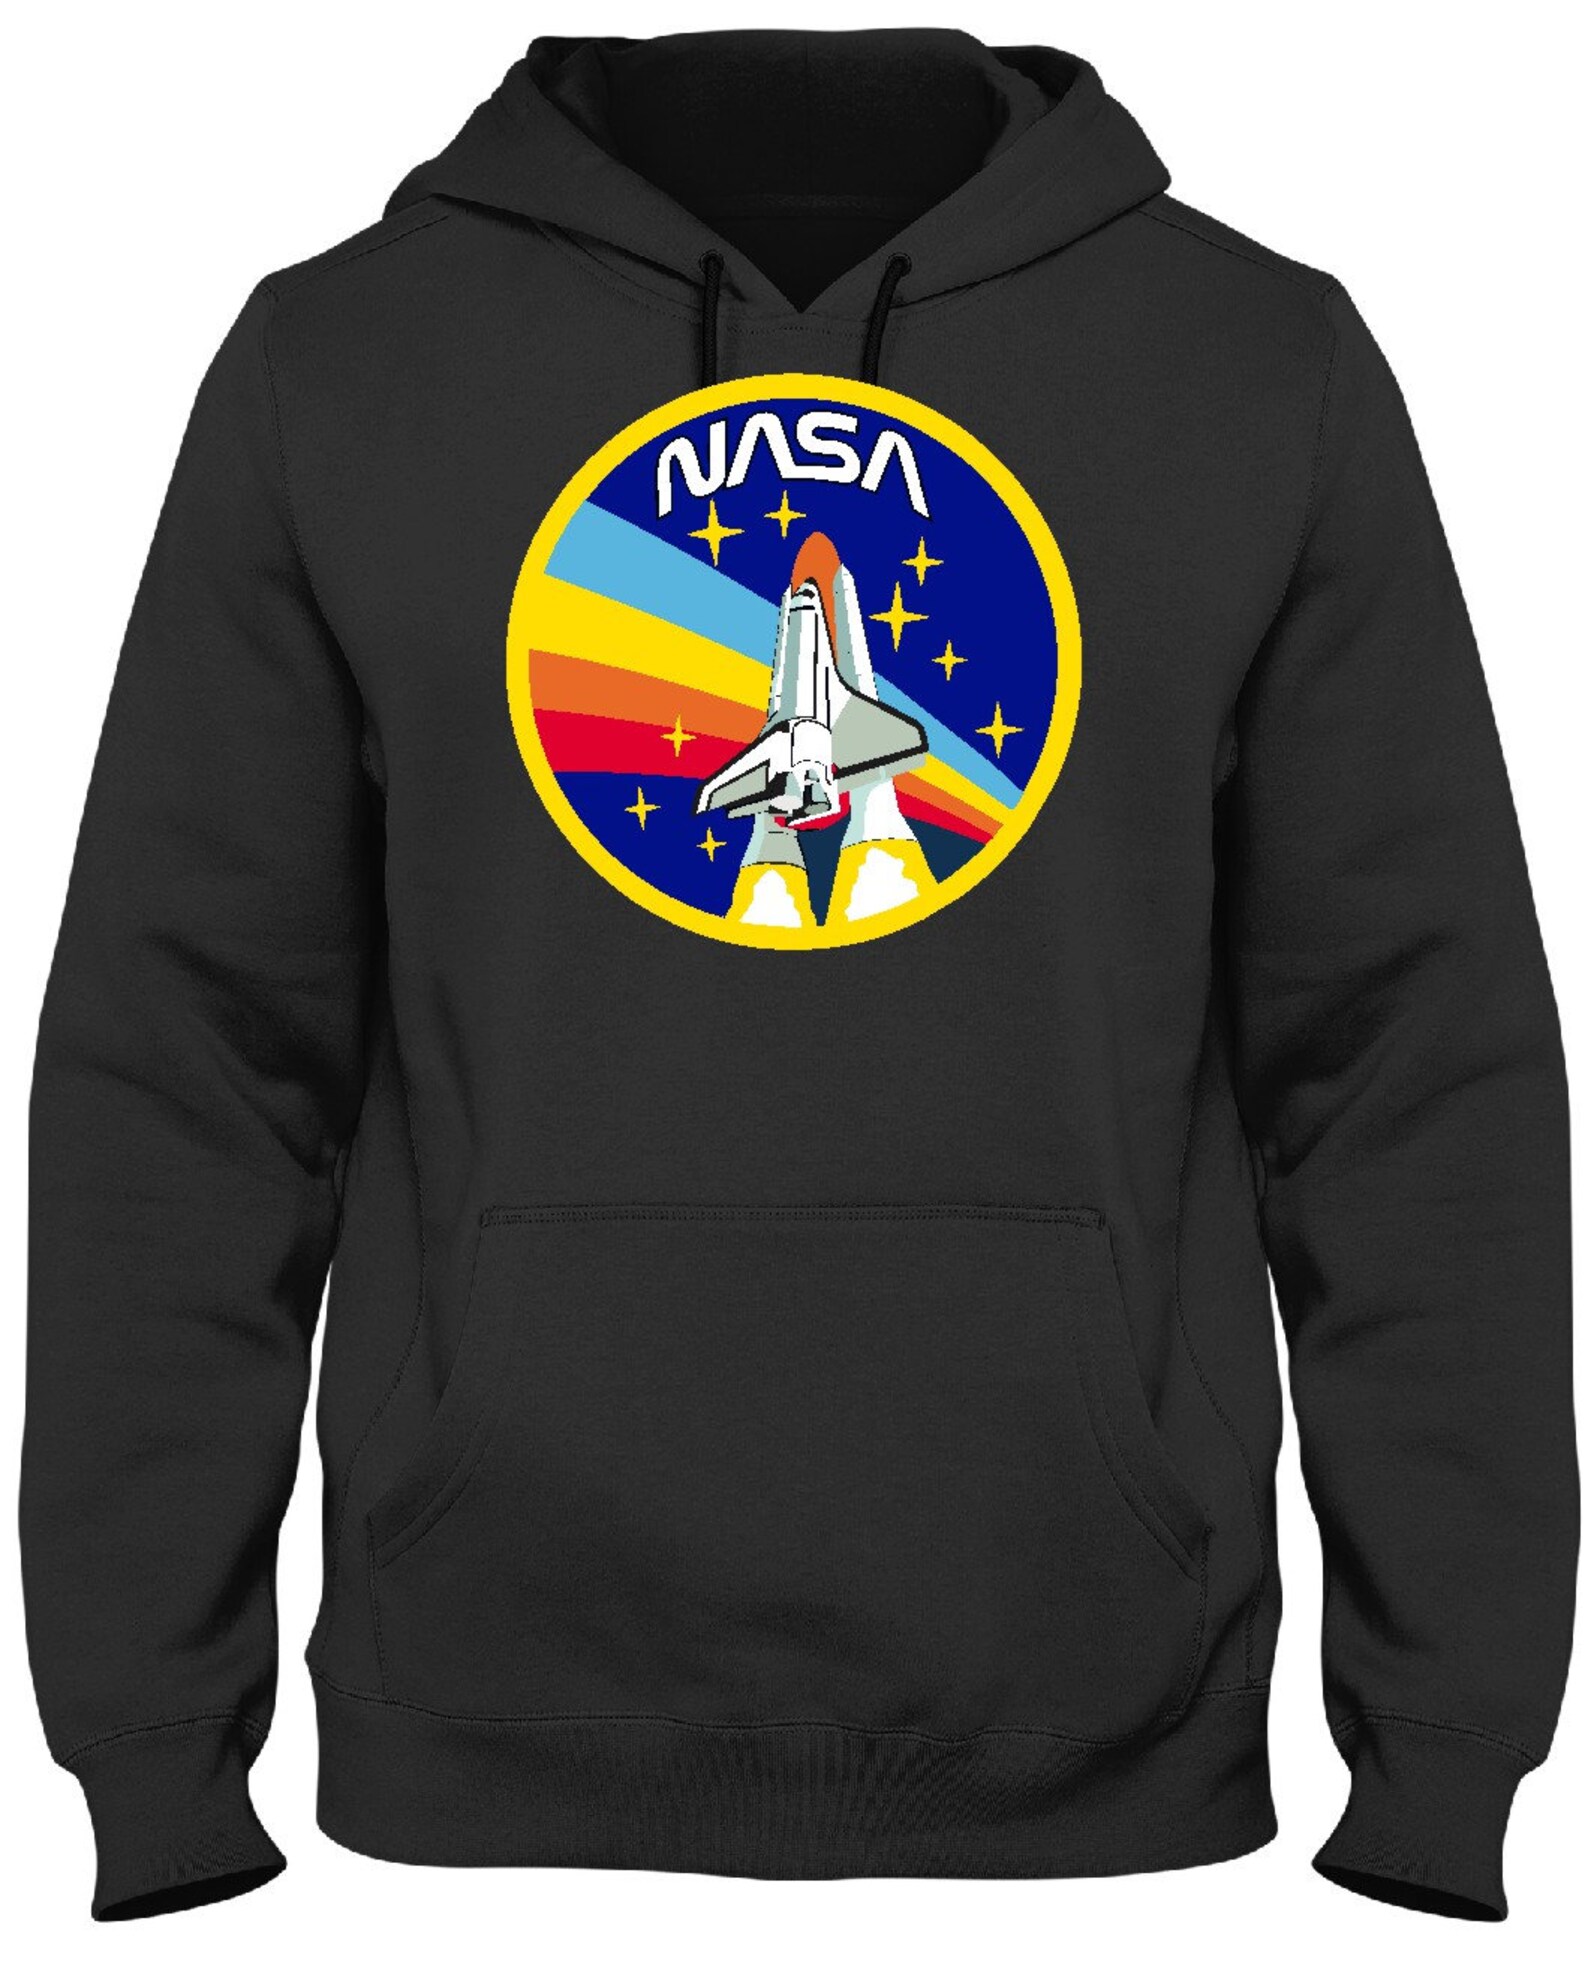 Nasa Hoodie Rainbow space shuttle multi coloured pride | Etsy